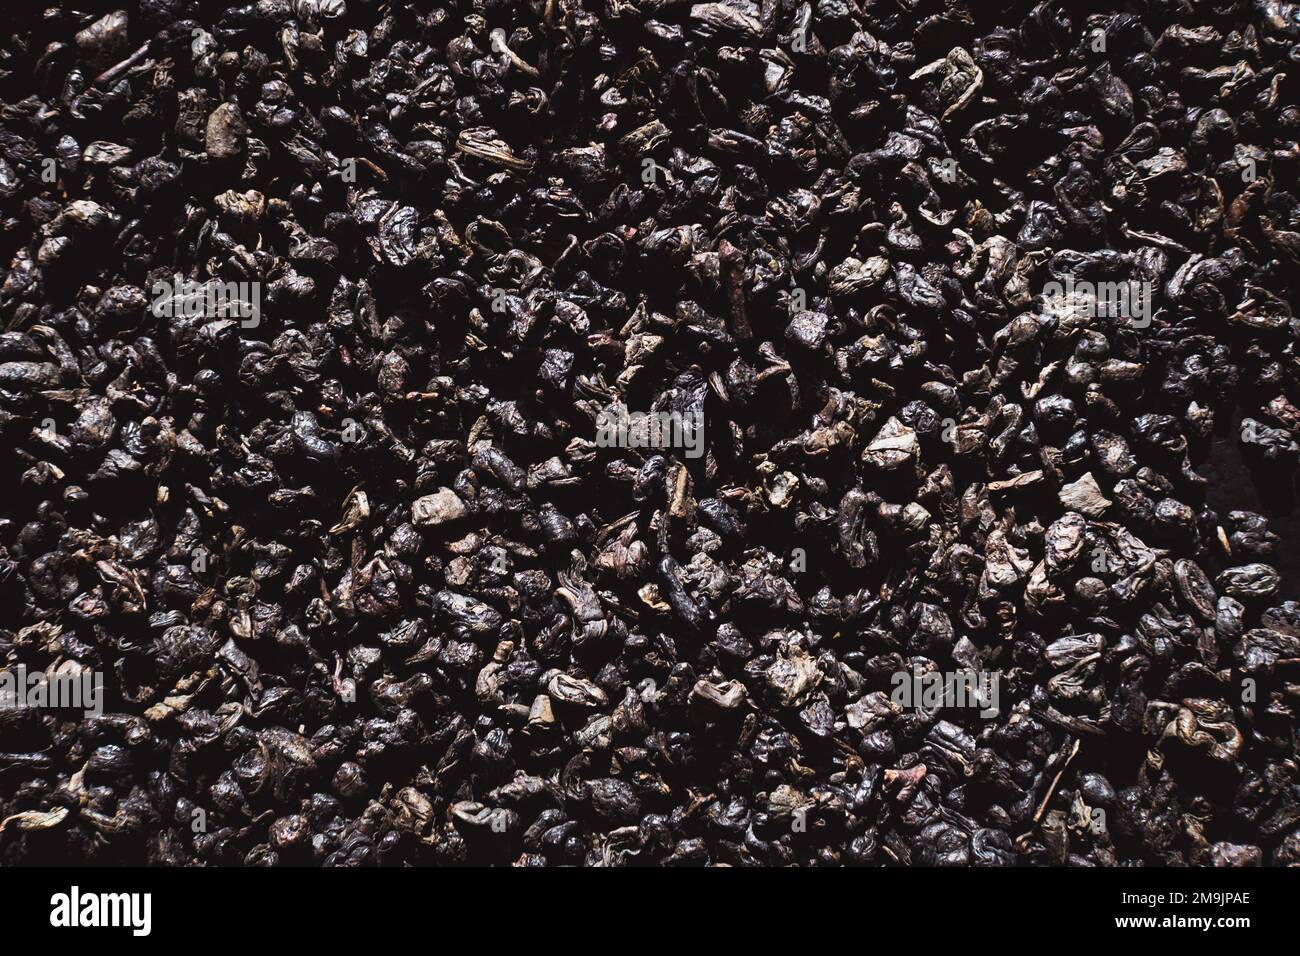 Black tea texture background. Black dried tea leaves, marco. Pattern of black tea leaves on a flat surface. Stock Photo